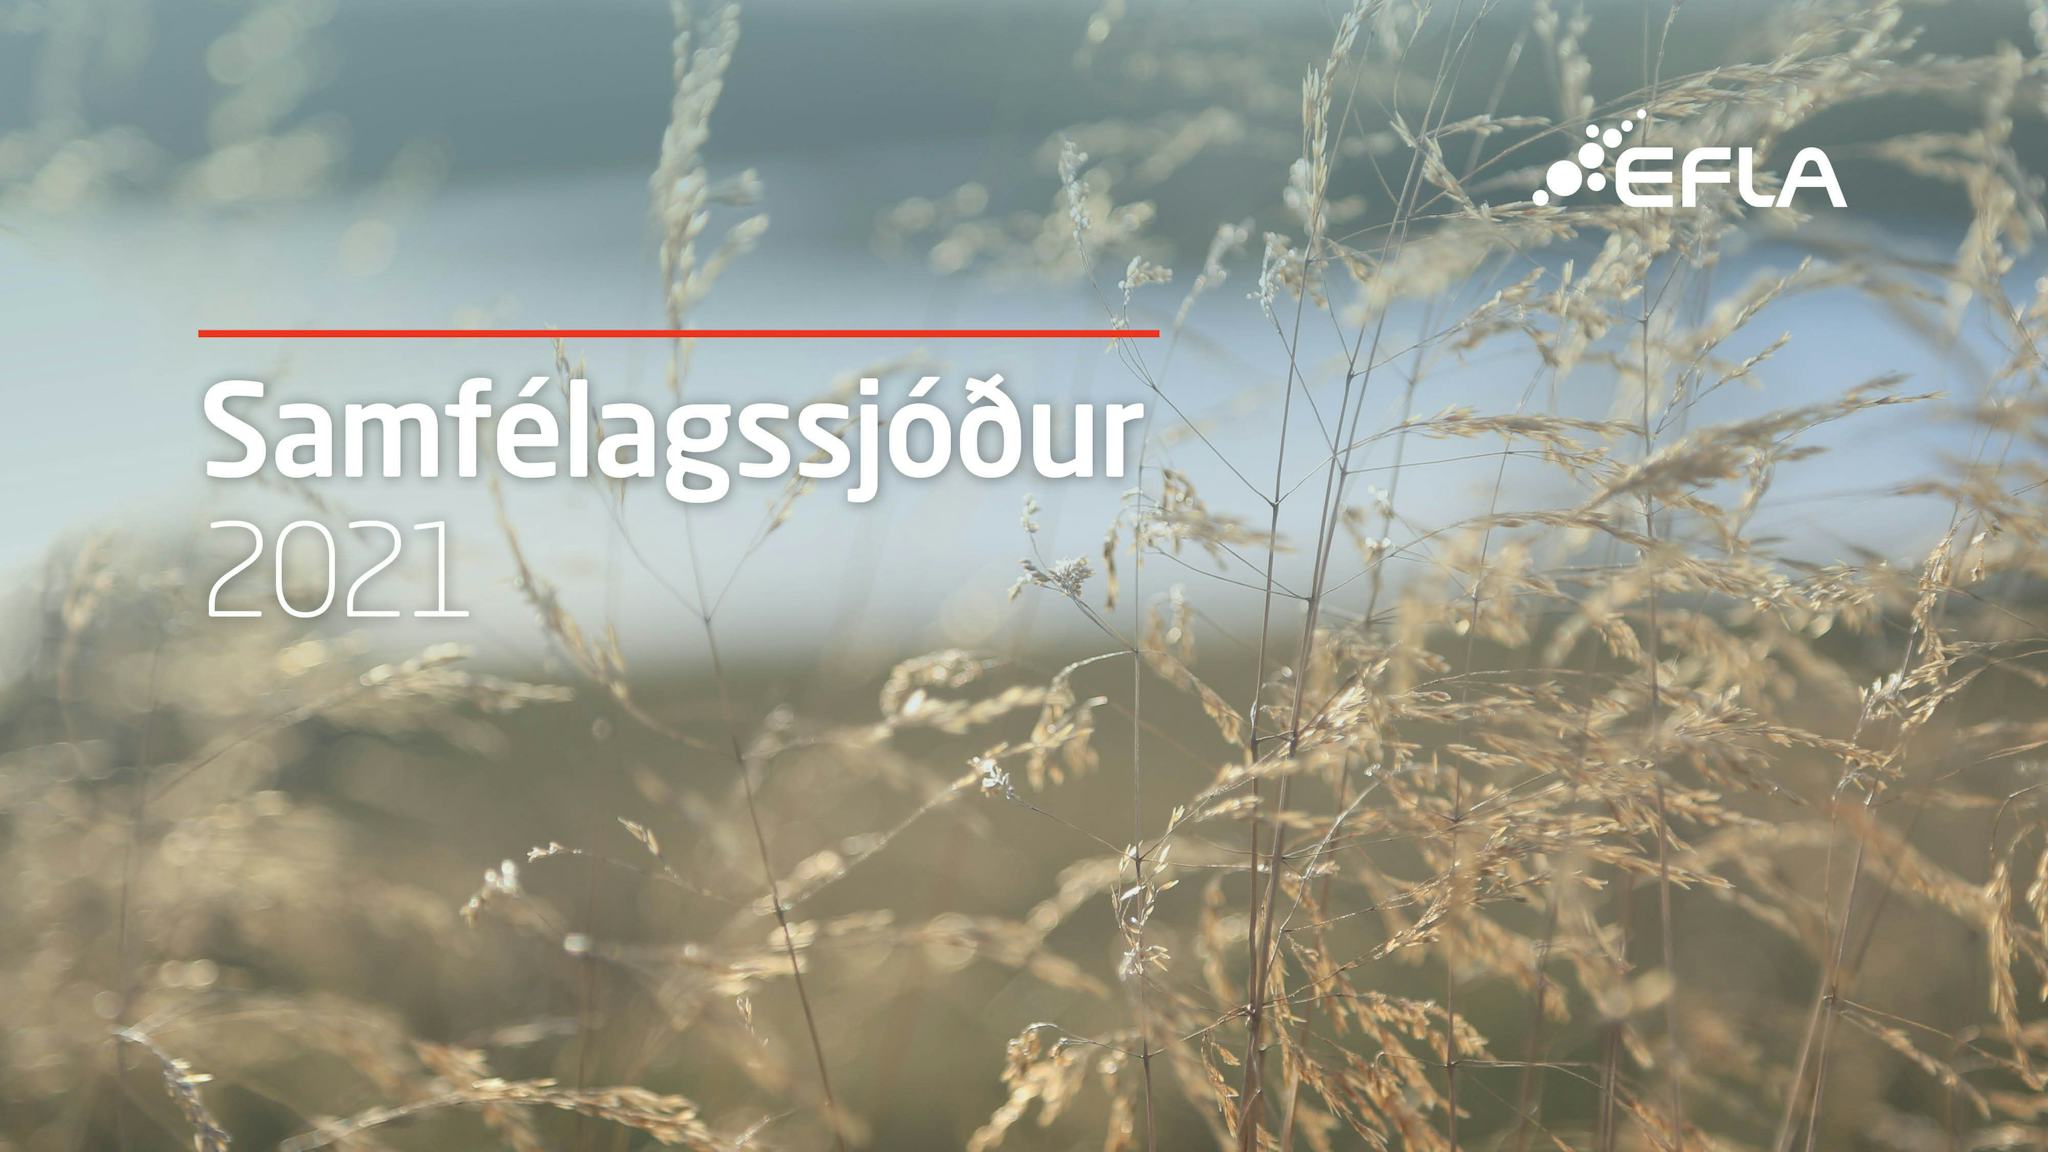 A backdrop of sunlit grasses with the text "Samfélagssjóður 2021" and the logo "EFLA"